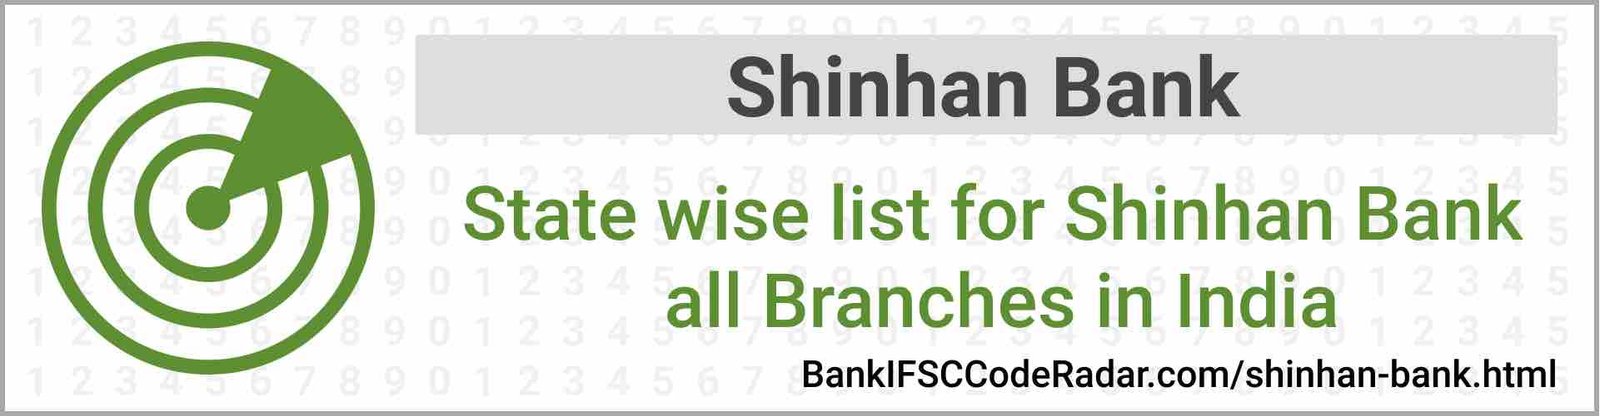 Shinhan Bank All Branches India